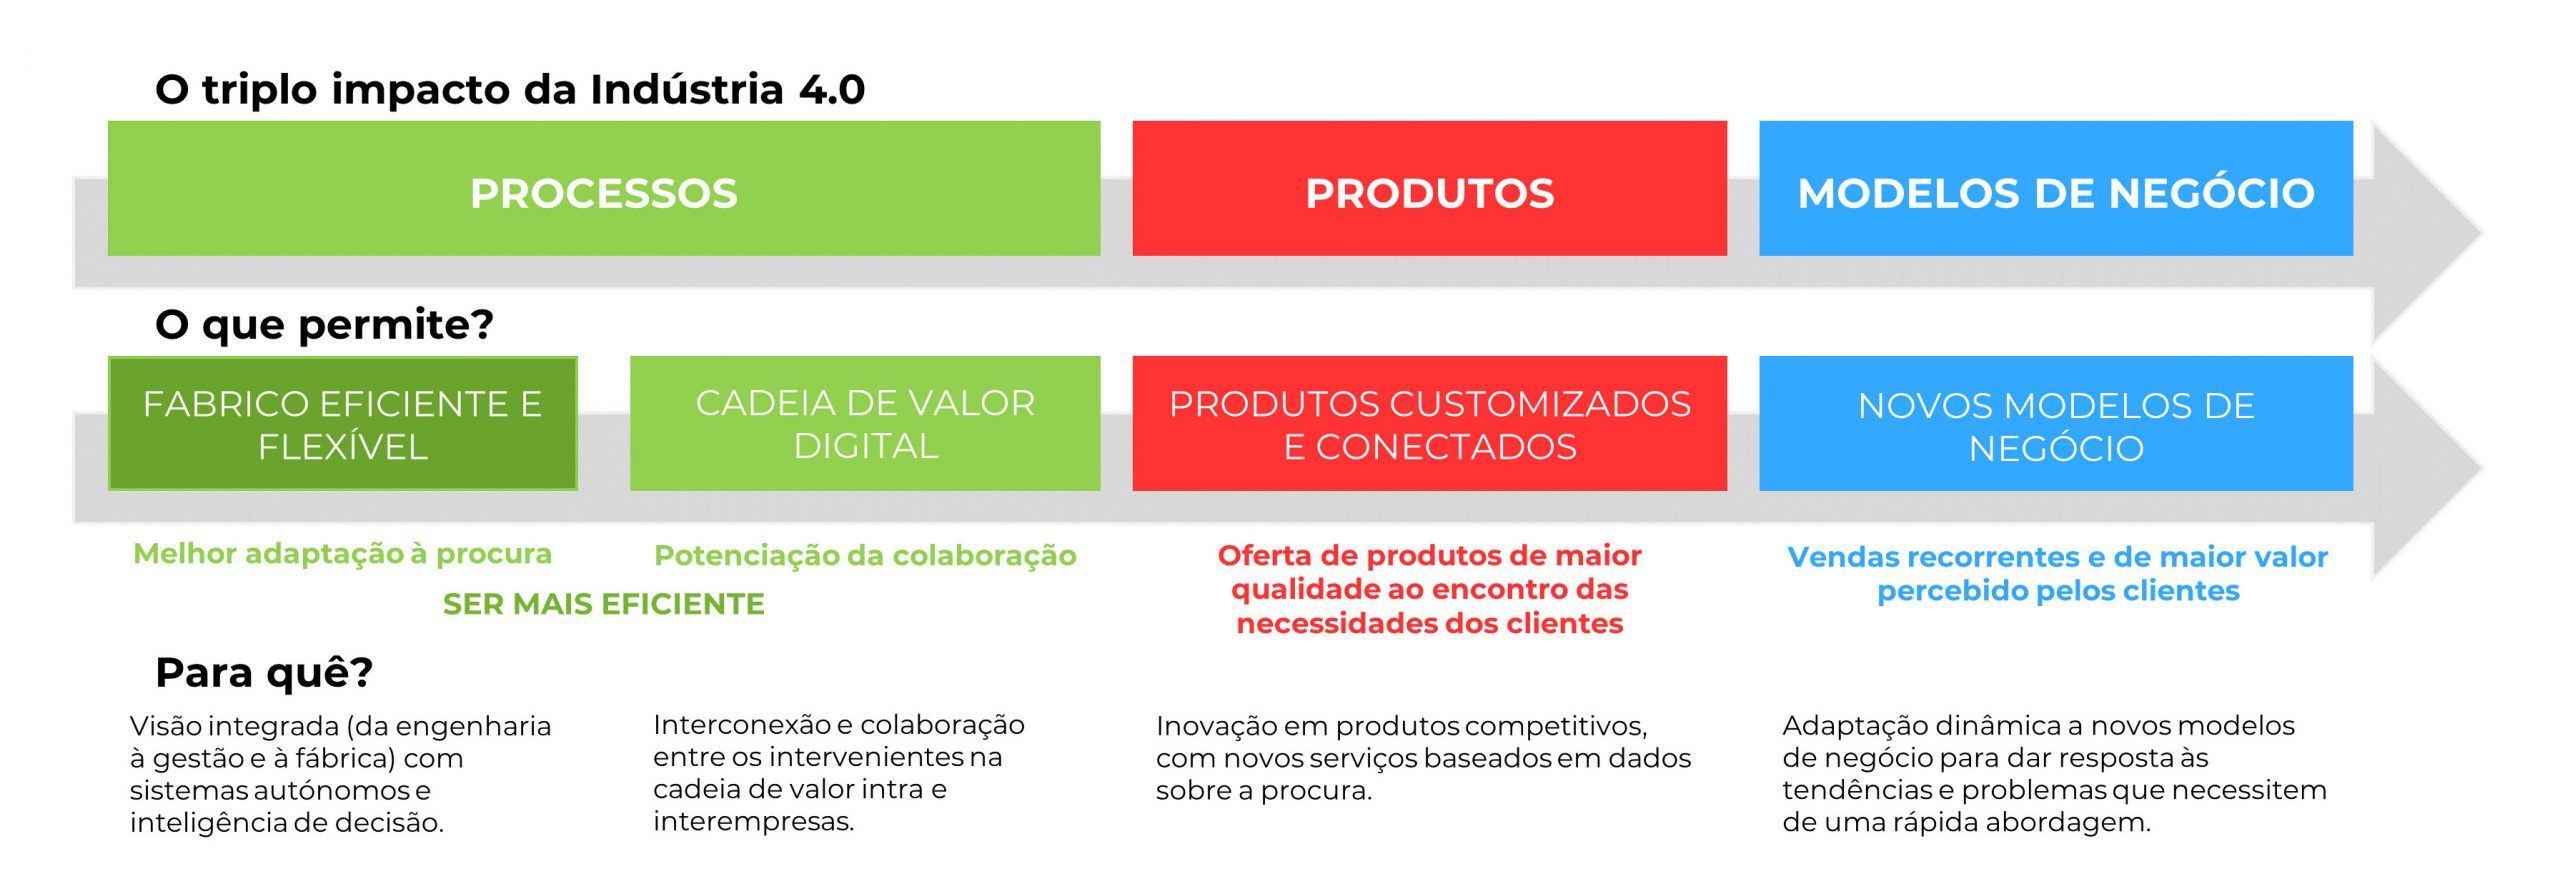 Sqédio by Ibermática | Triplo impacto da Indústria 4.0